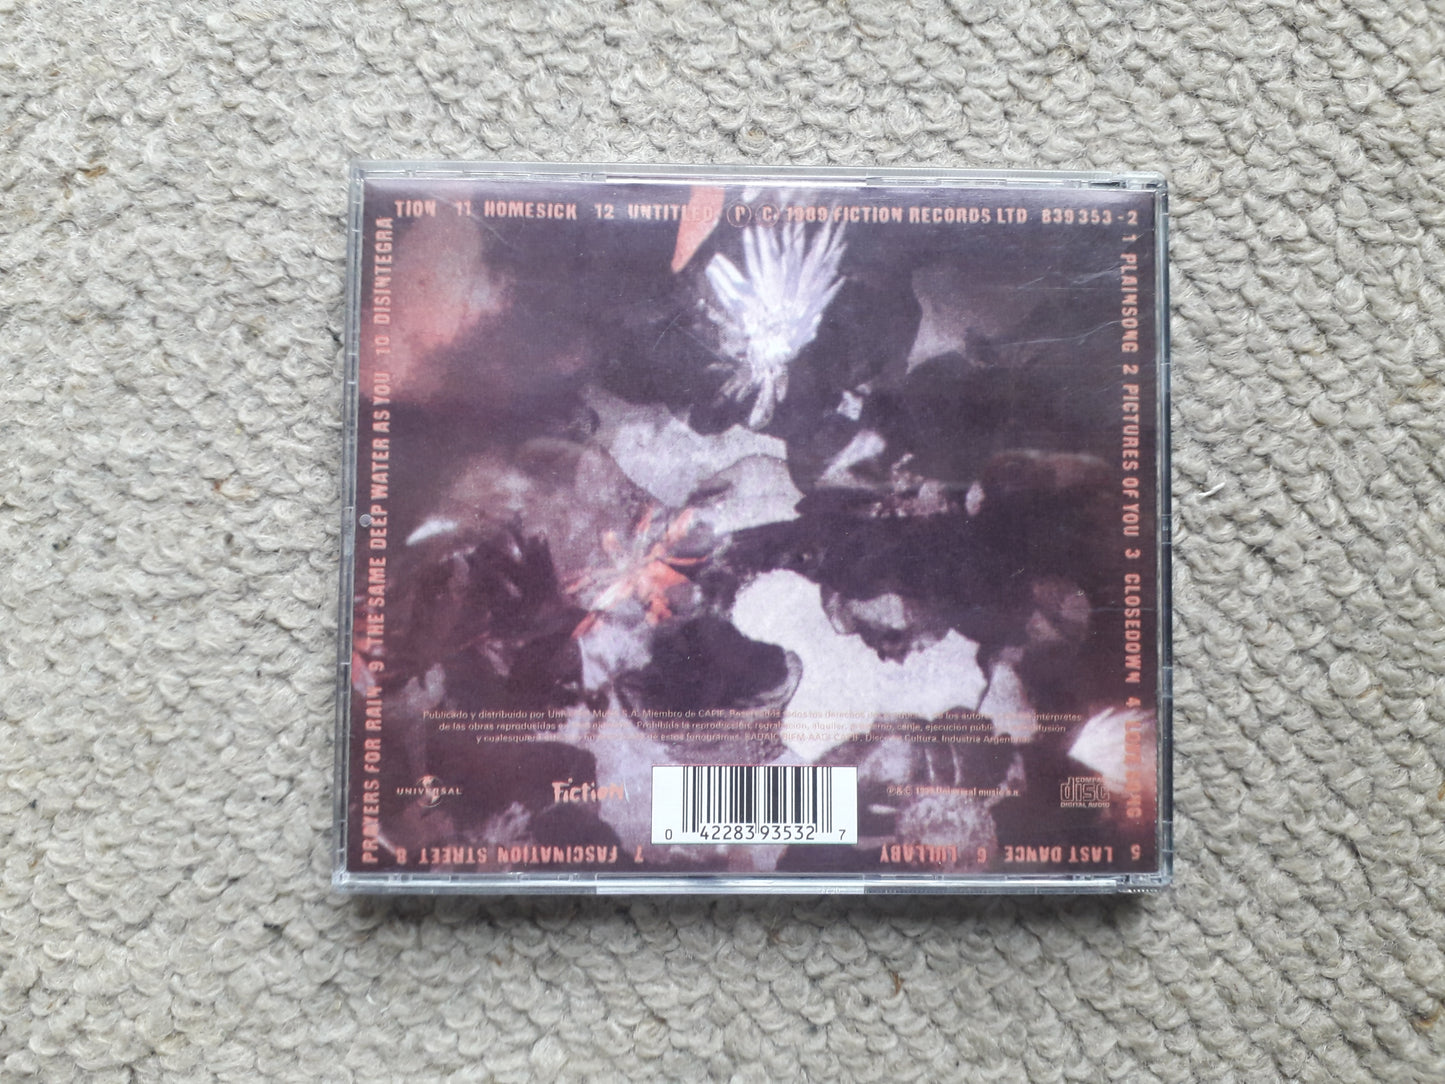 The Cure-Disintegration CD (839 353-2)